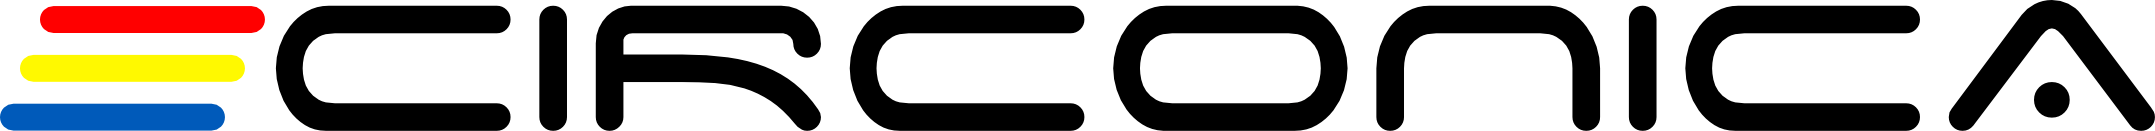 Circonica_Logo